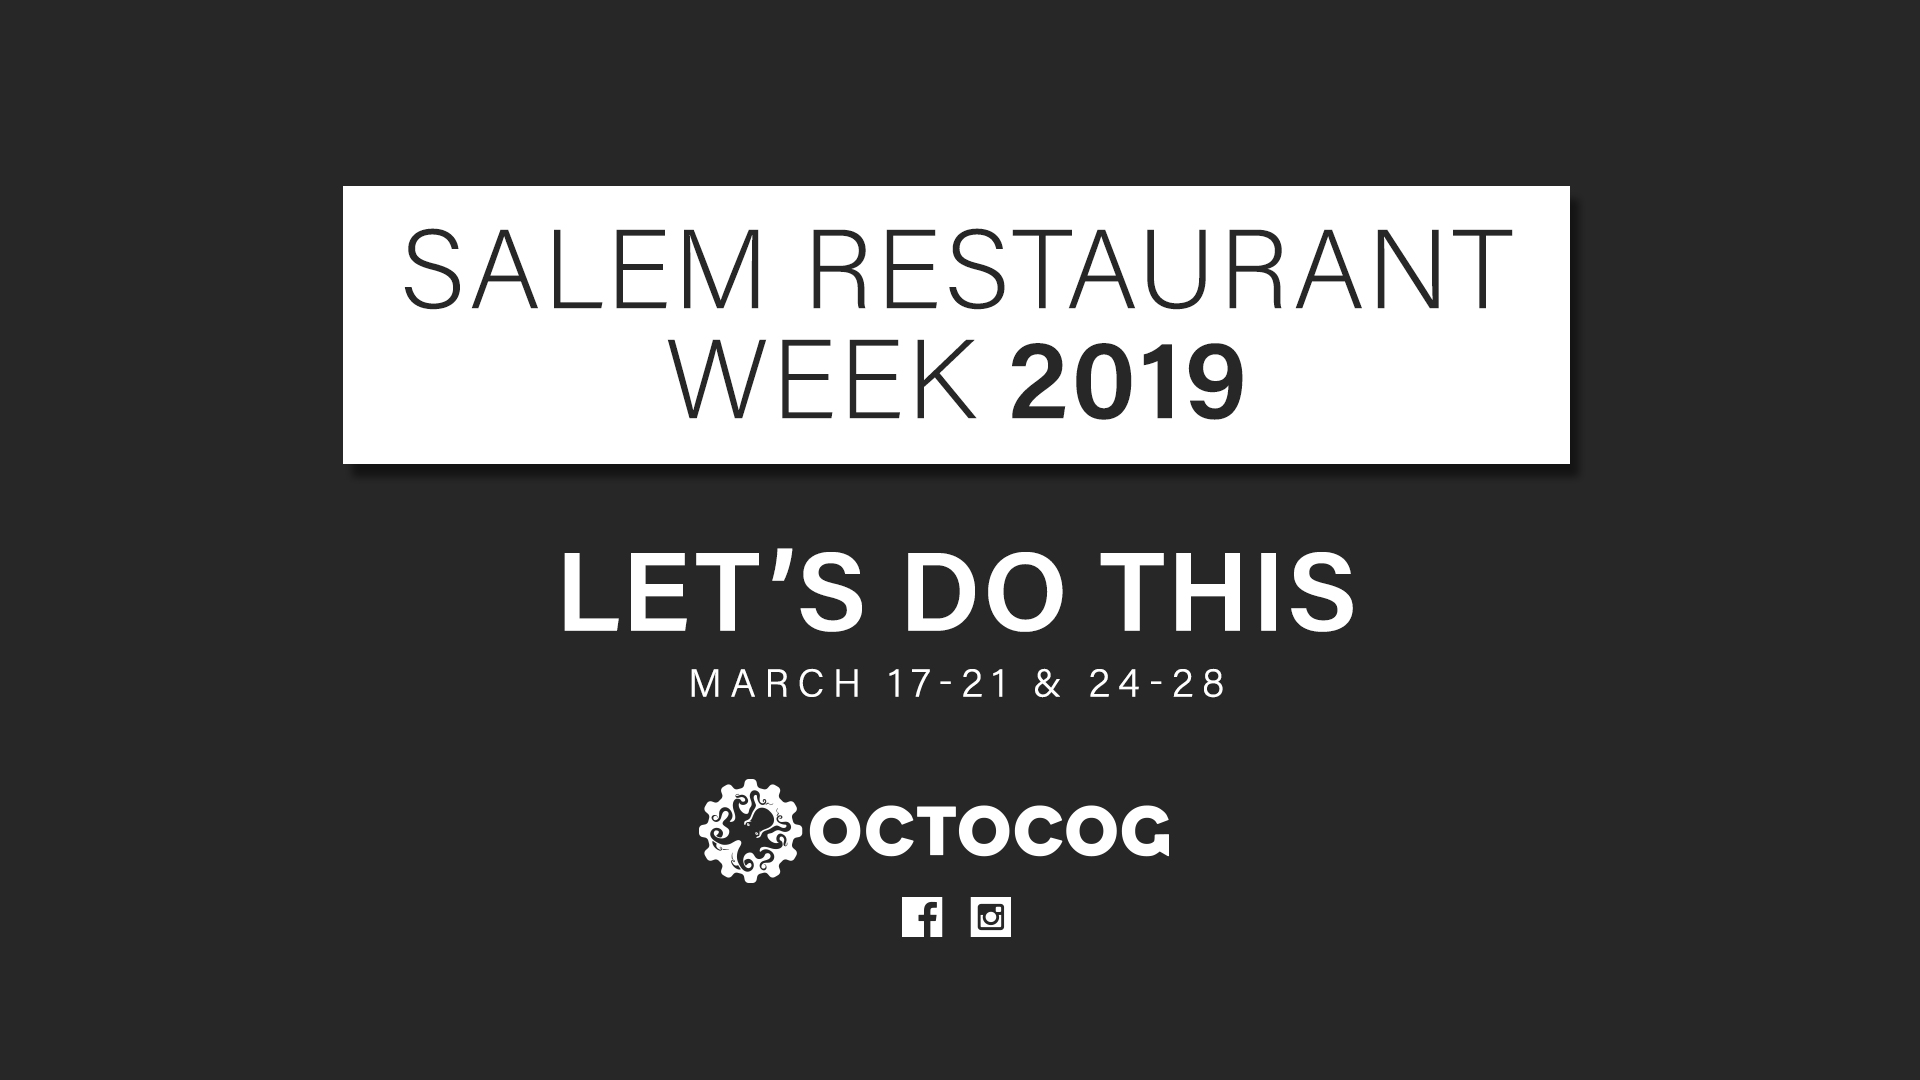 Restaurant Week in Salem MA OctoCog Marketing & Design